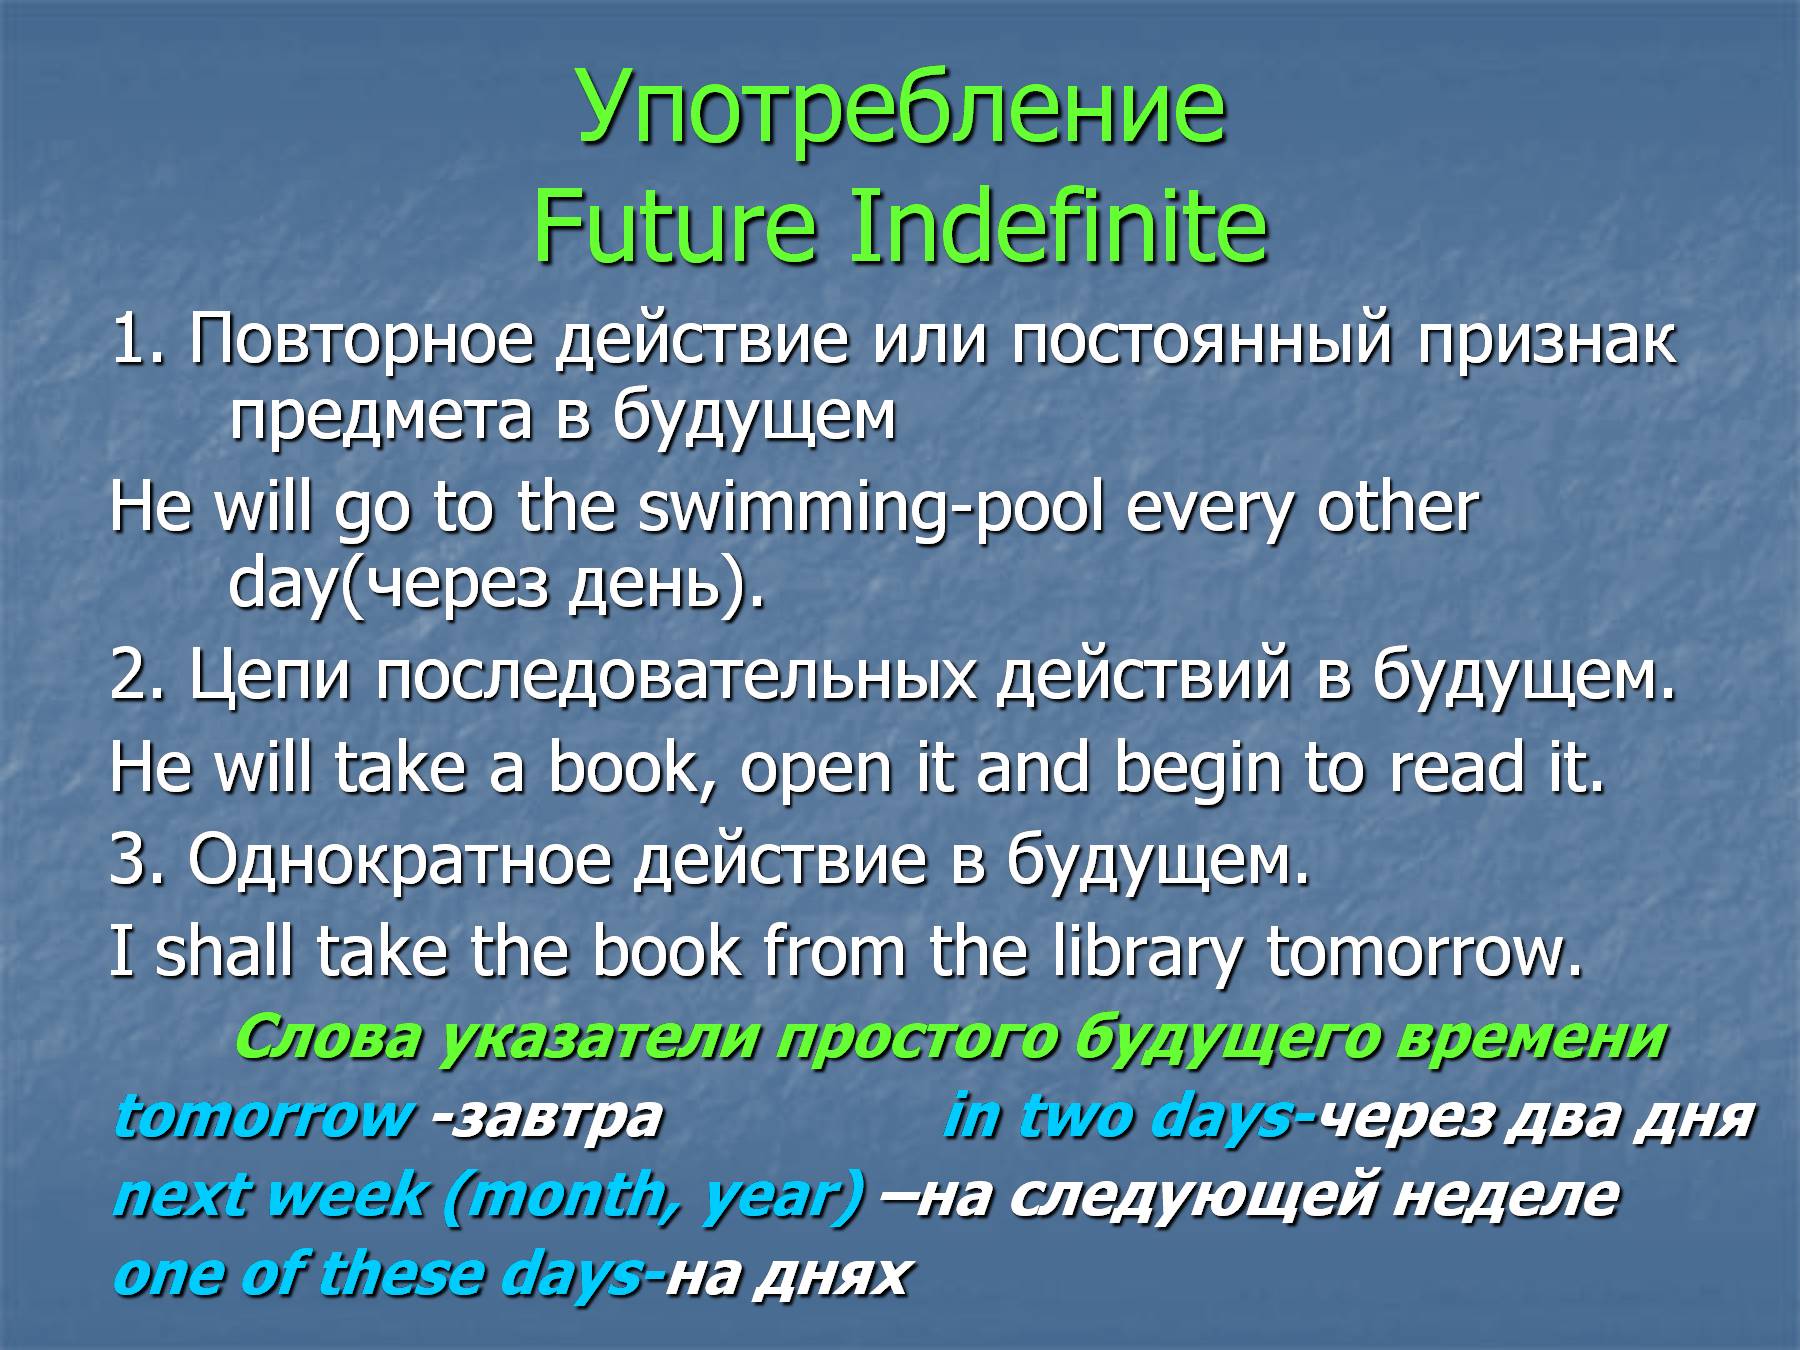 Употребление future simple. Употребление Future indefinite. Презентации Future indefinite. Употребление будущего времени. Future indefinite Tense ppt.